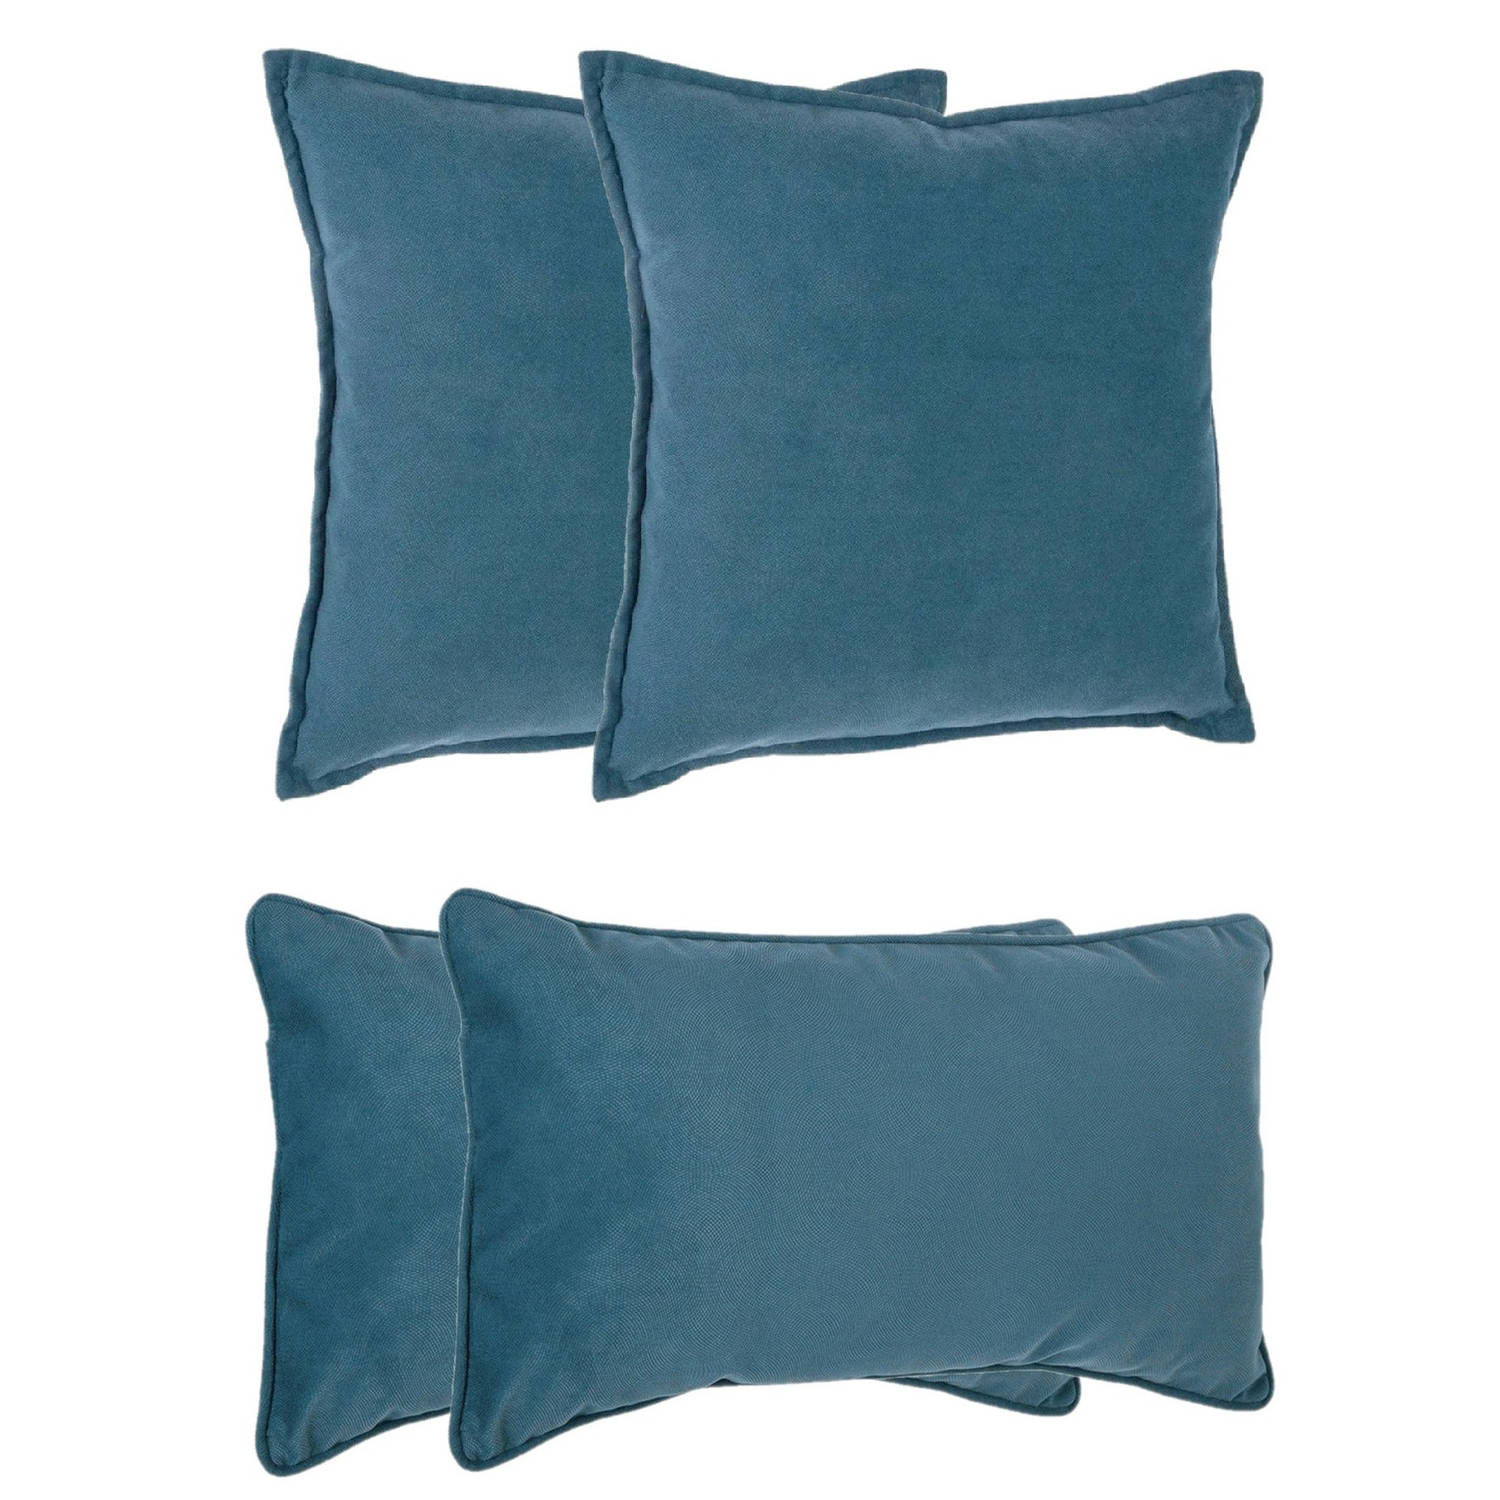 Bank-sierkussens huiskamer Sophia set 4x stuks Blauw polyester met rits In 2 formaten Sierkussens